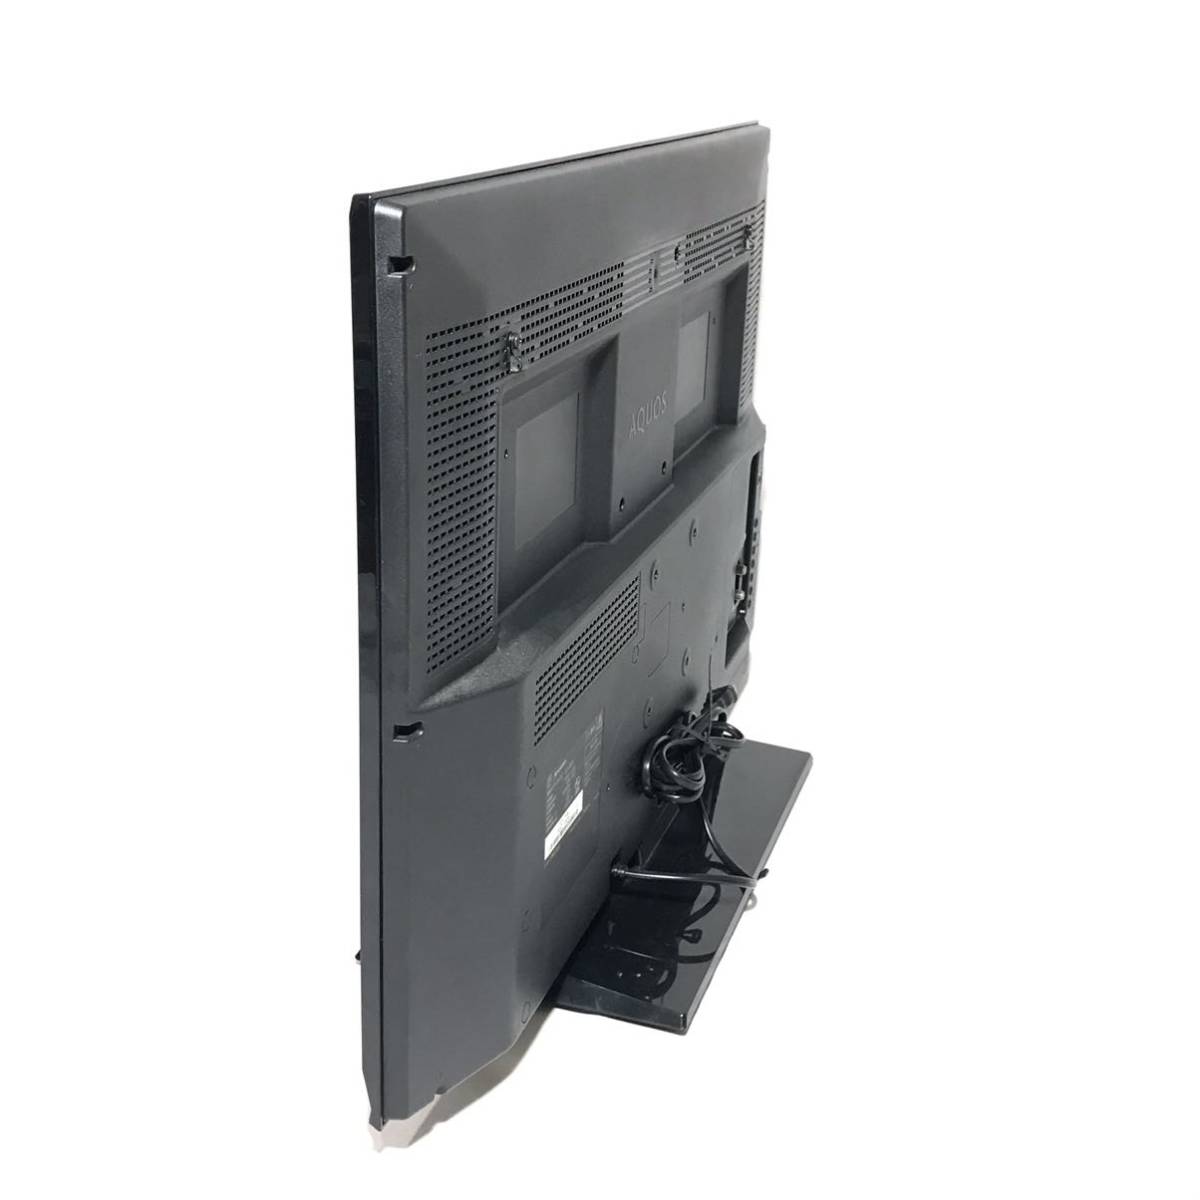 SHARP シャープ 液晶 カラー テレビ LC-32H7 32V型 ワイド 壁掛け AQUOS アクオス 2012年製 HDMI USB LAN  対応 地上 BS 動作確認済み 人気